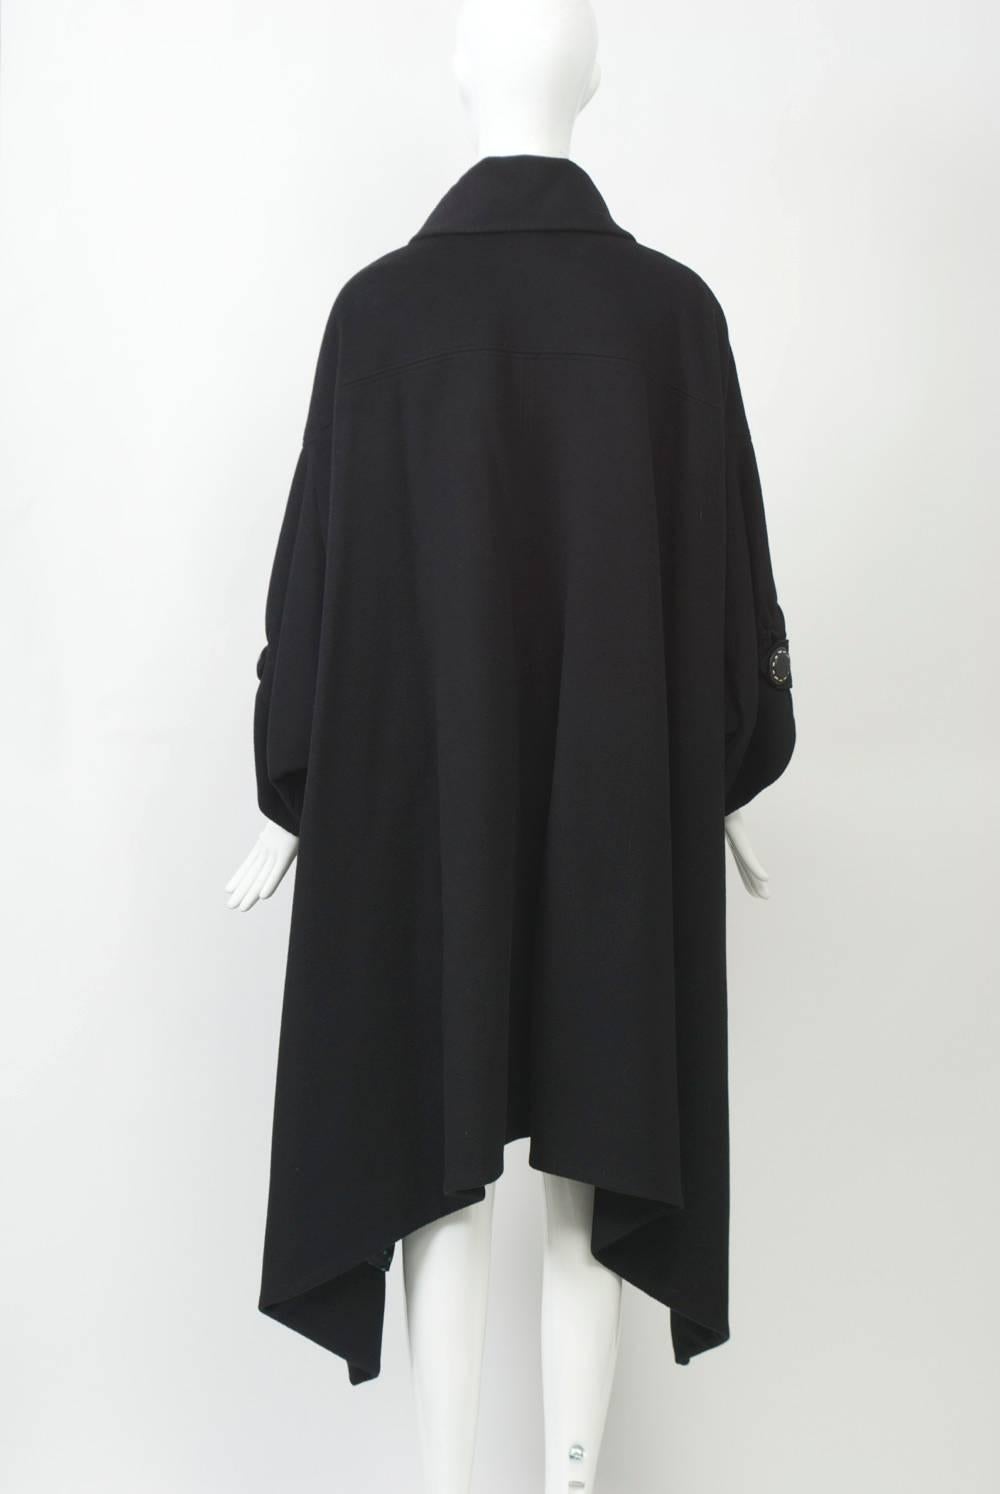 Kenzo Black Cashmere Coat 1